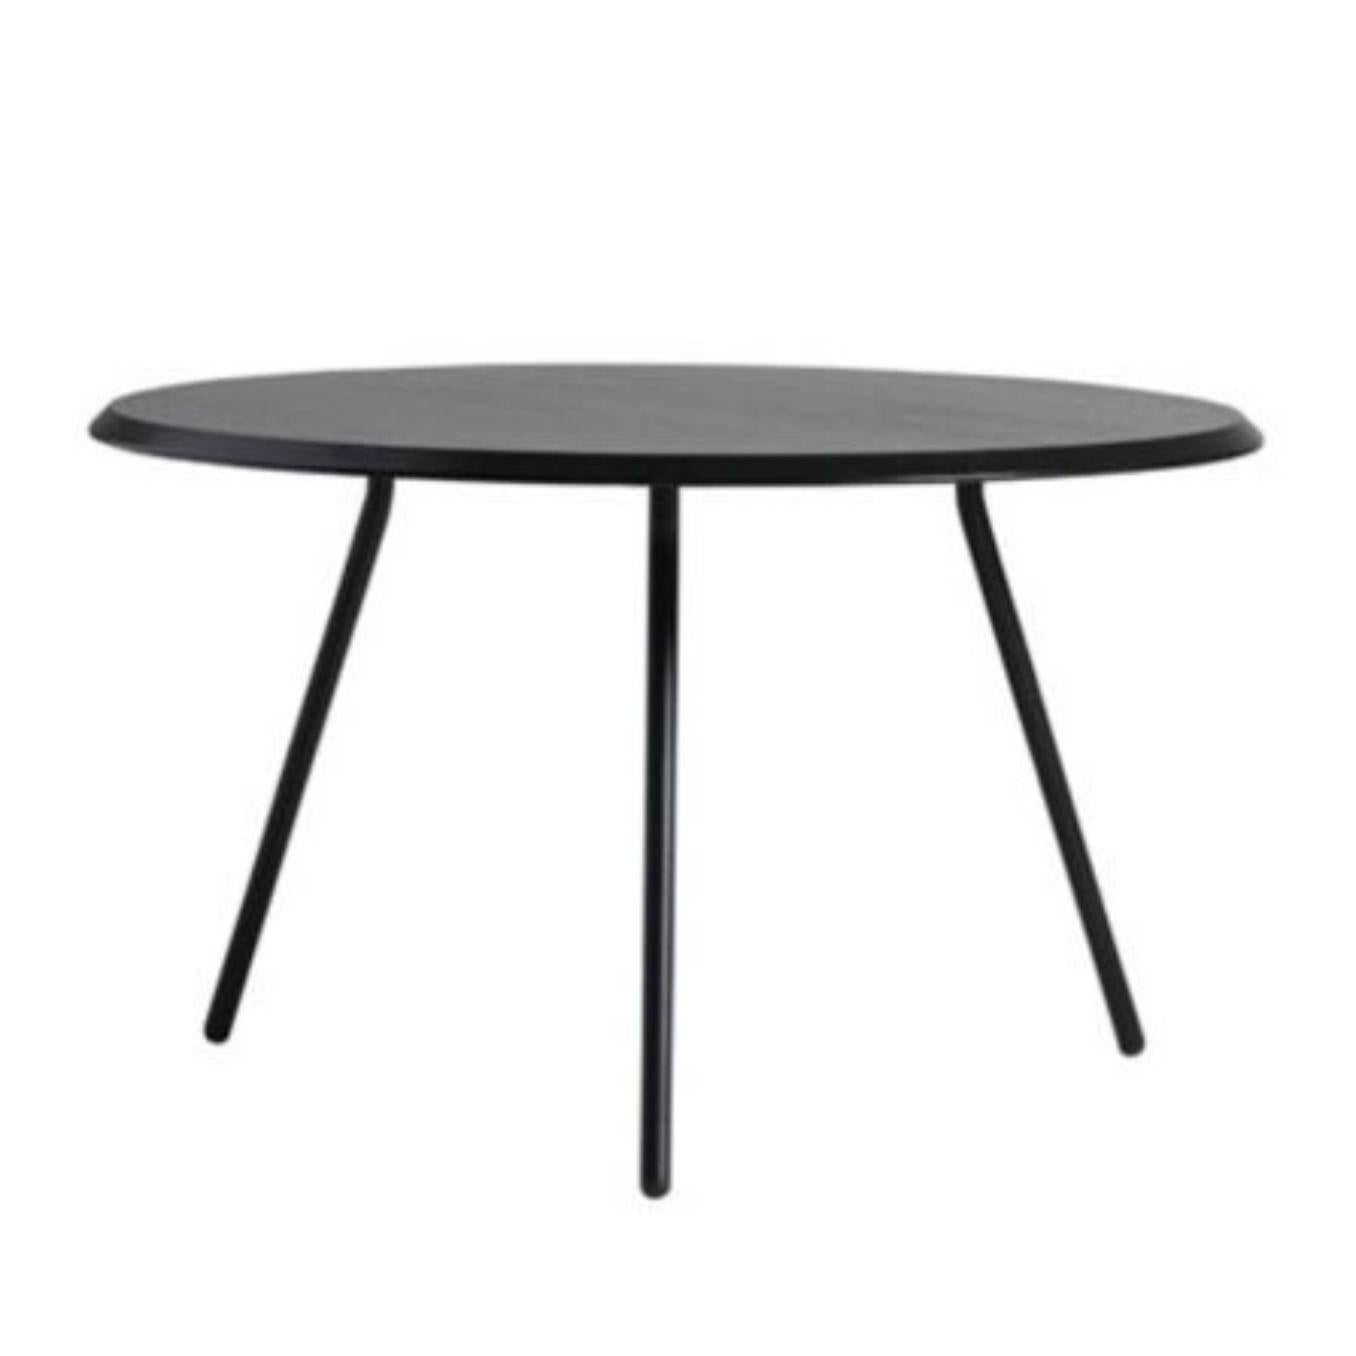 Danish Black Ash Soround Coffee Table 75 by Nur Design For Sale